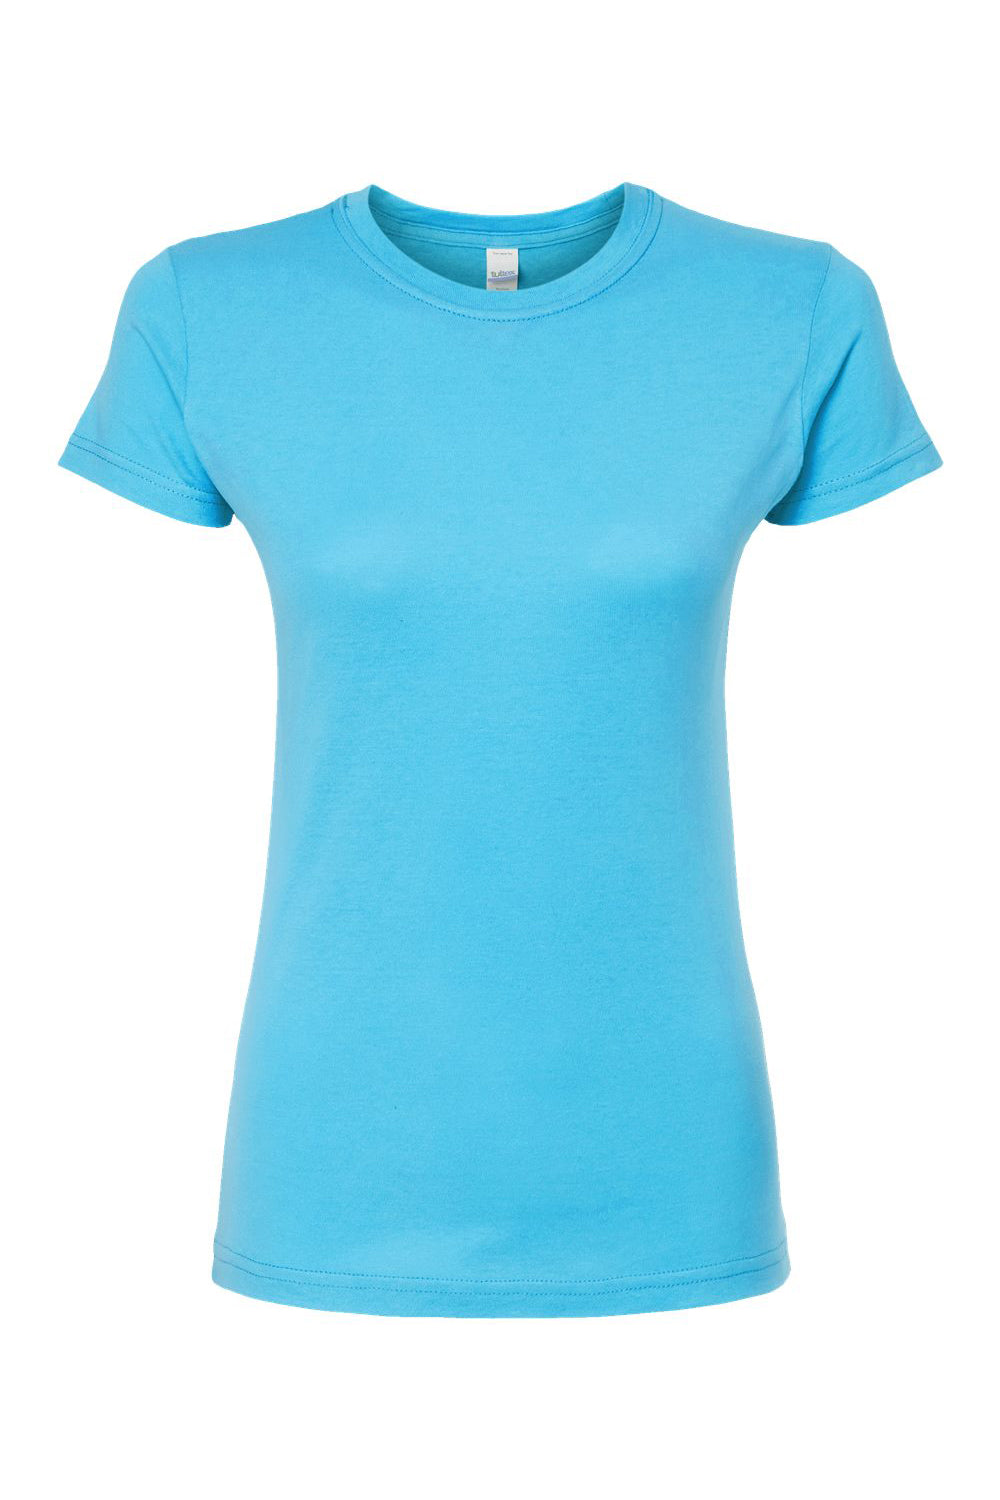 Tultex 213 Womens Fine Jersey Slim Fit Short Sleeve Crewneck T-Shirt Aqua Blue Flat Front